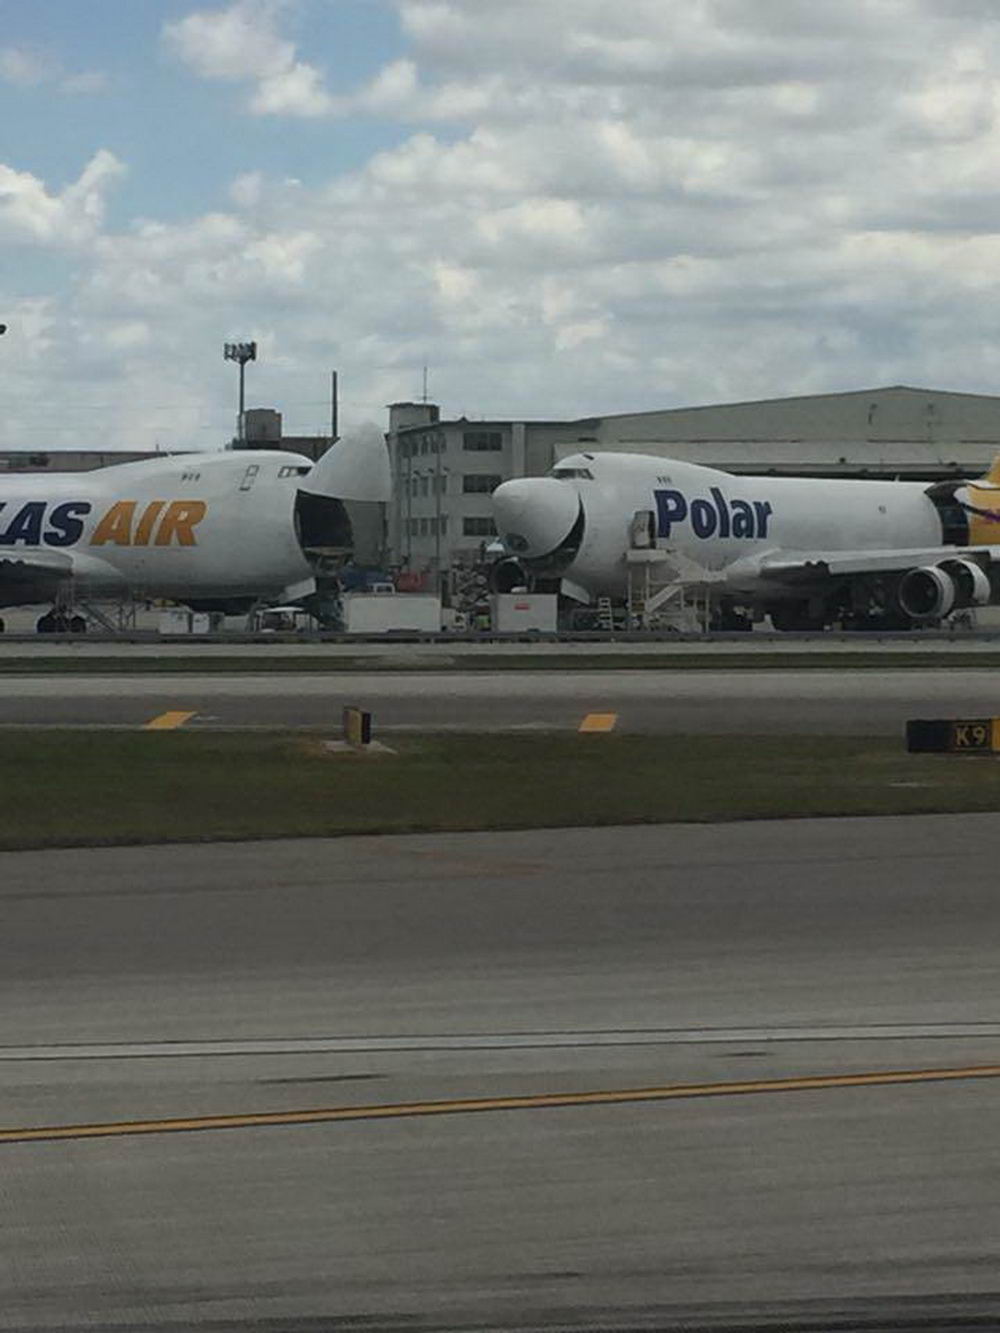 random pics - two jumbo jets cracking a joke - 2 As Air Polar can